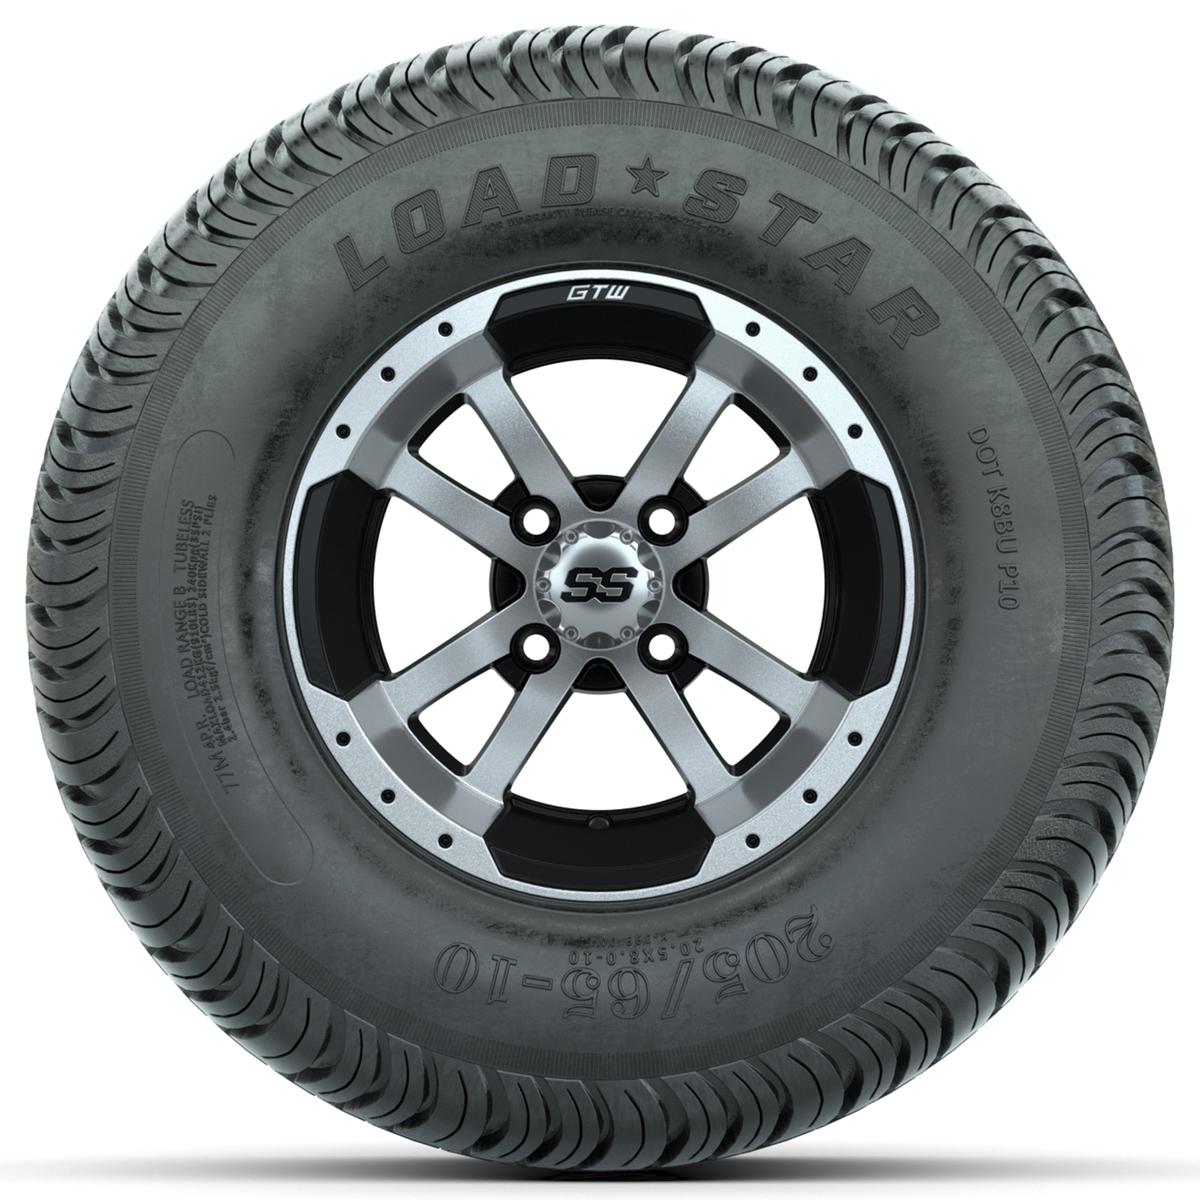 Set of (4) 10 in GTW Storm Trooper Wheels with 205/65-10 Kenda Load Star Street Tires